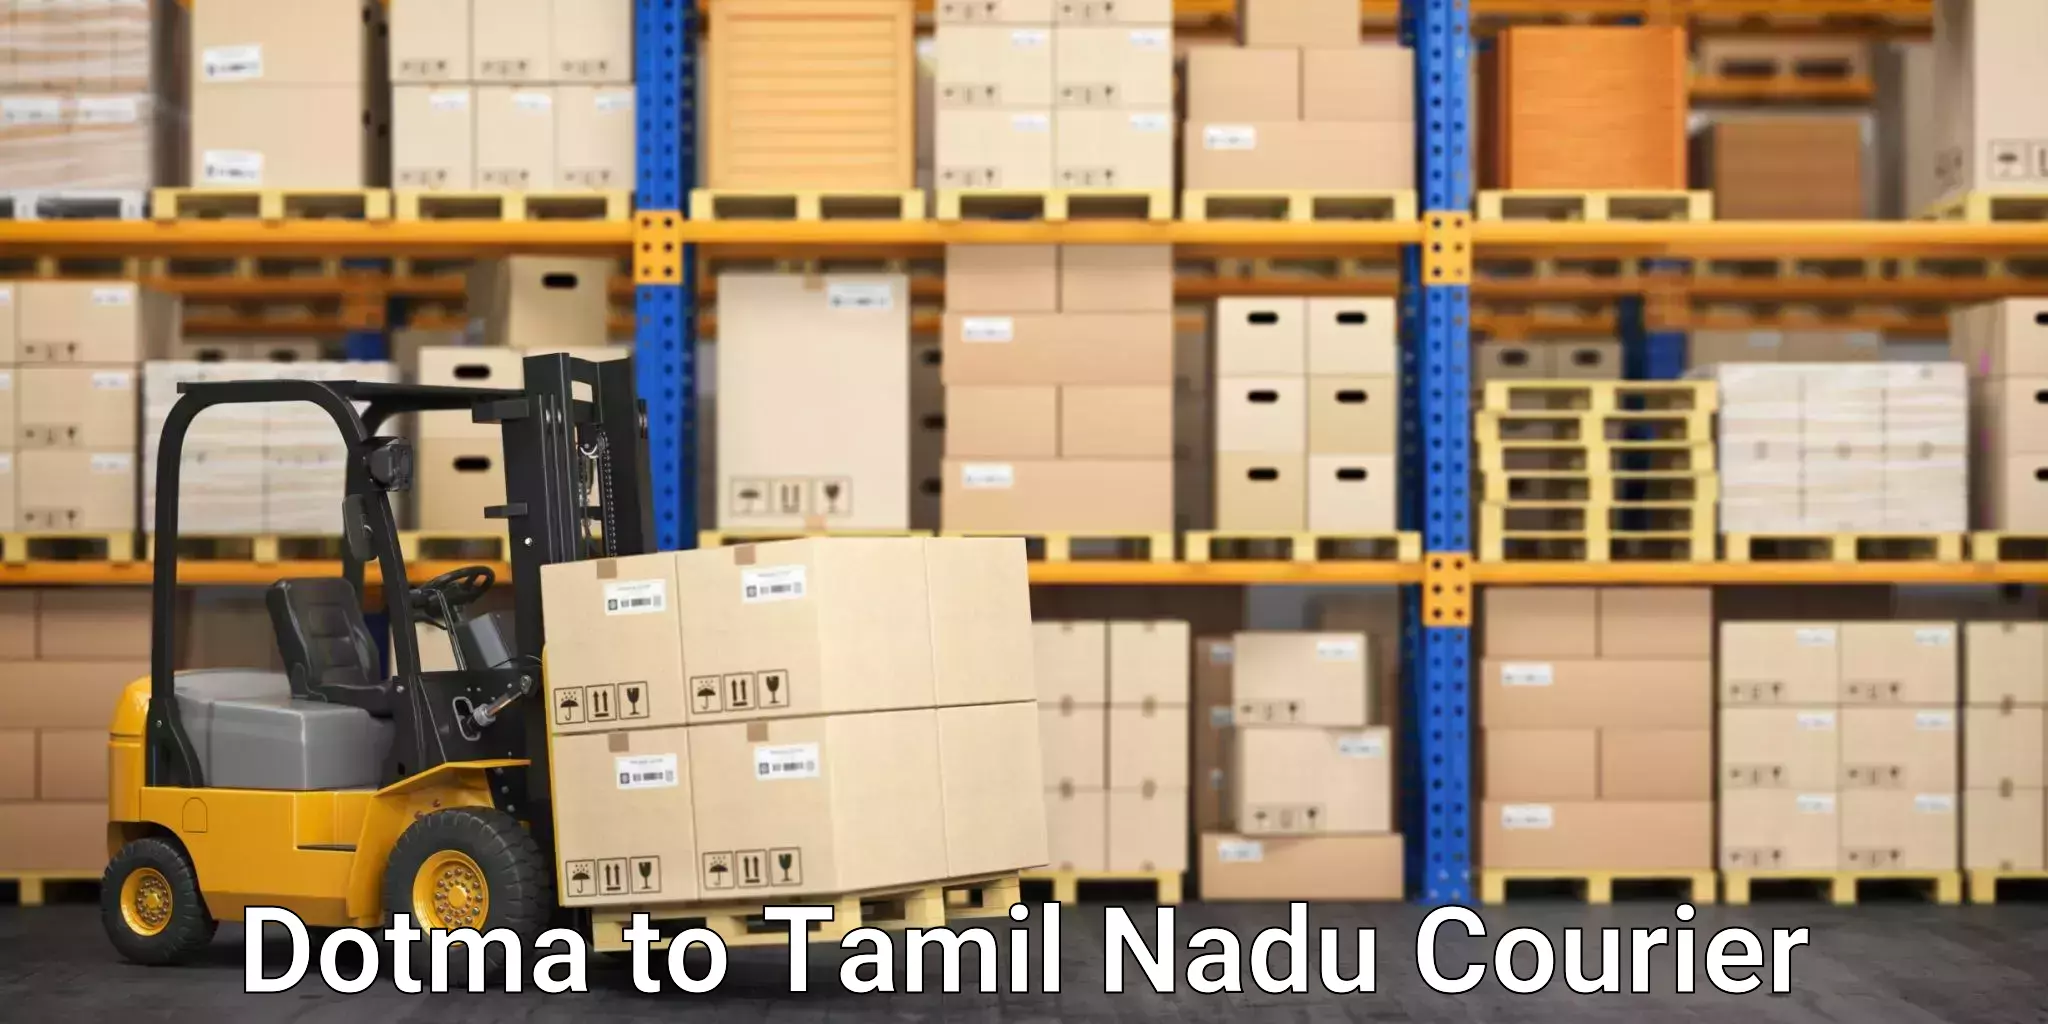 Affordable international shipping Dotma to Tamil Nadu